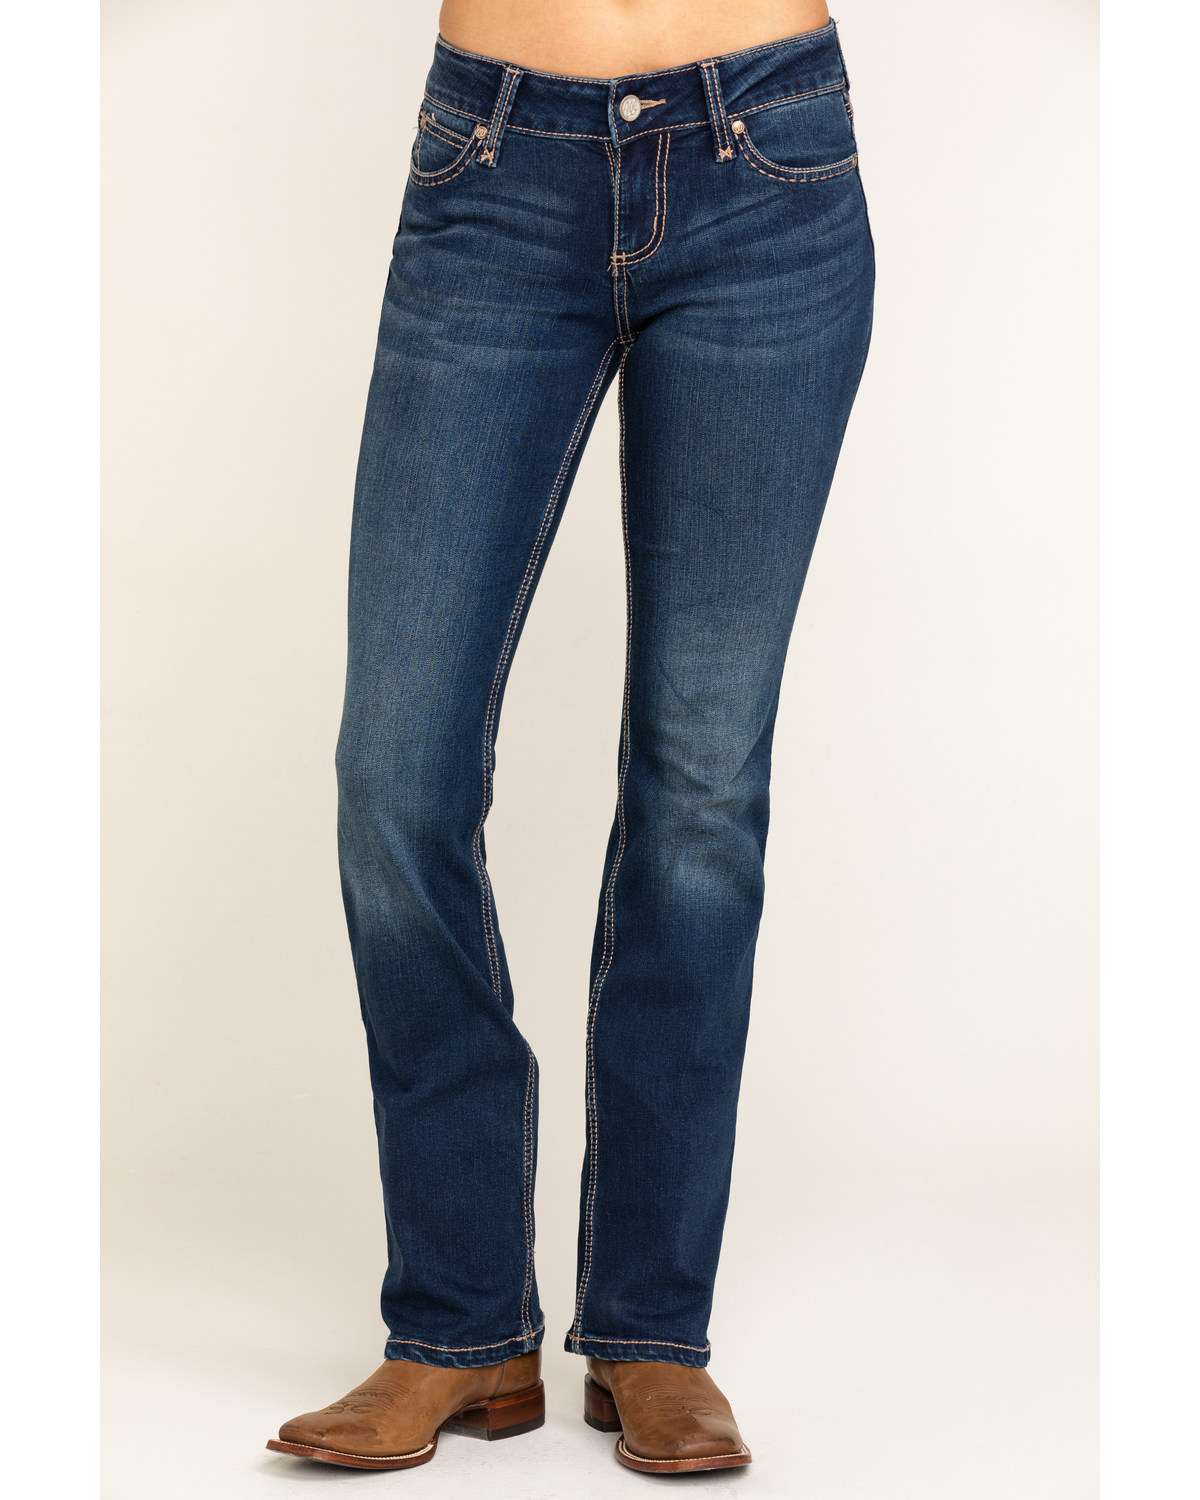 Wrangler Women's Dark Wash Retro Mae Jeans Indigo 9W x 34L - image 2 of 7